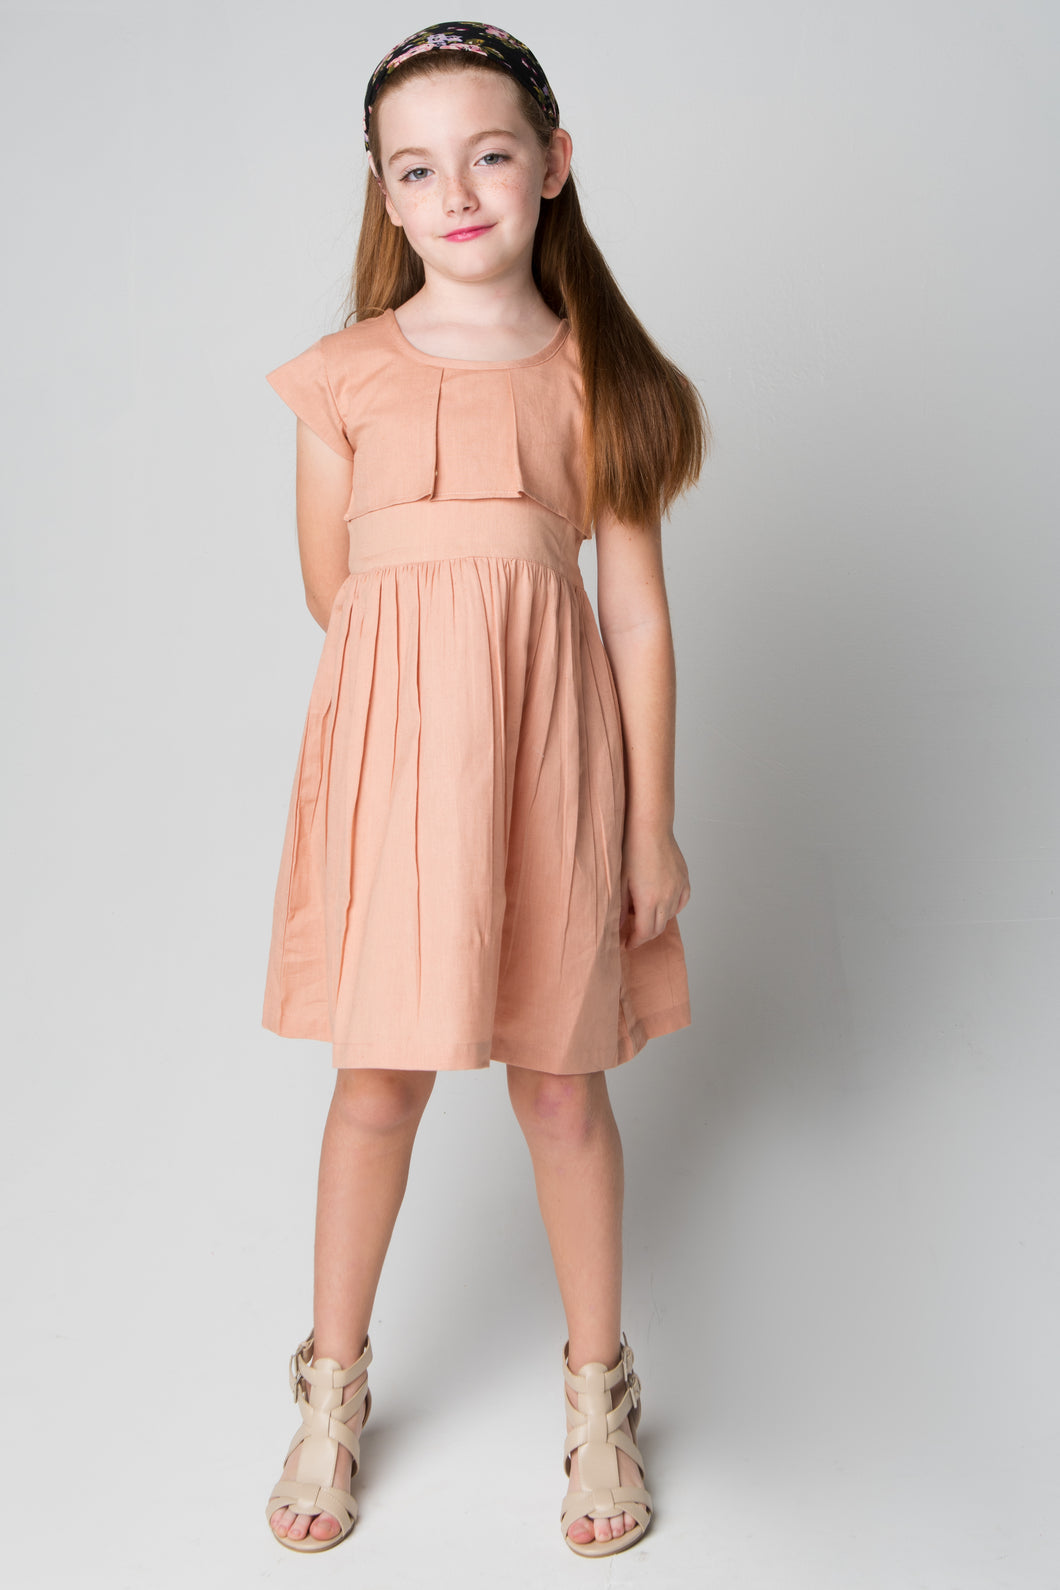 Blush Layered Dress With Belt Tie - Kids Wholesale Boutique Clothing, Dress - Girls Dresses, Yo Baby Wholesale - Yo Baby